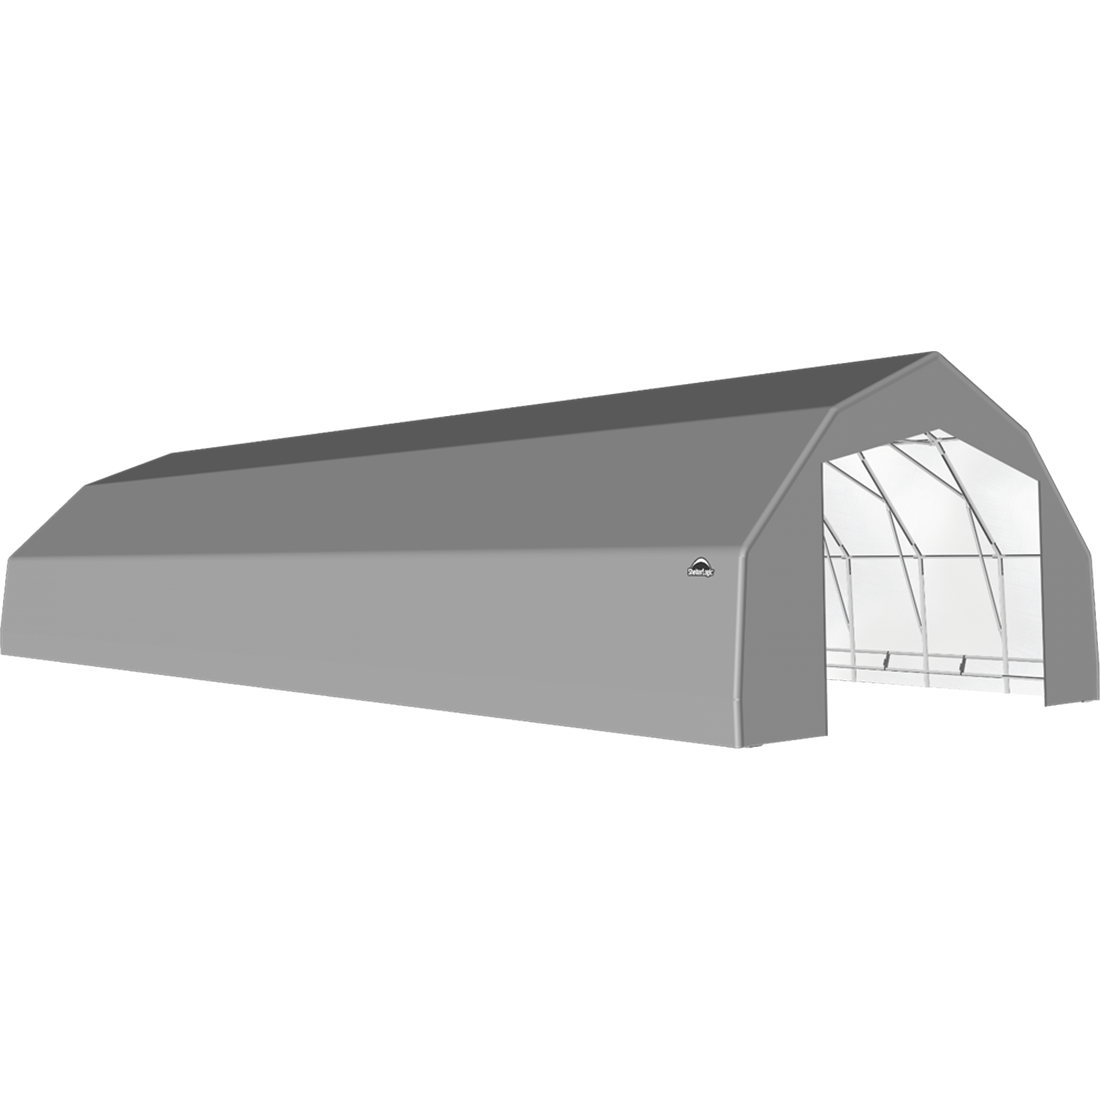 ShelterTech SP Series Barn Shelter, 25 ft. x 56 ft. x 14 ft. Heavy Duty PVC 14.5 oz. Gray